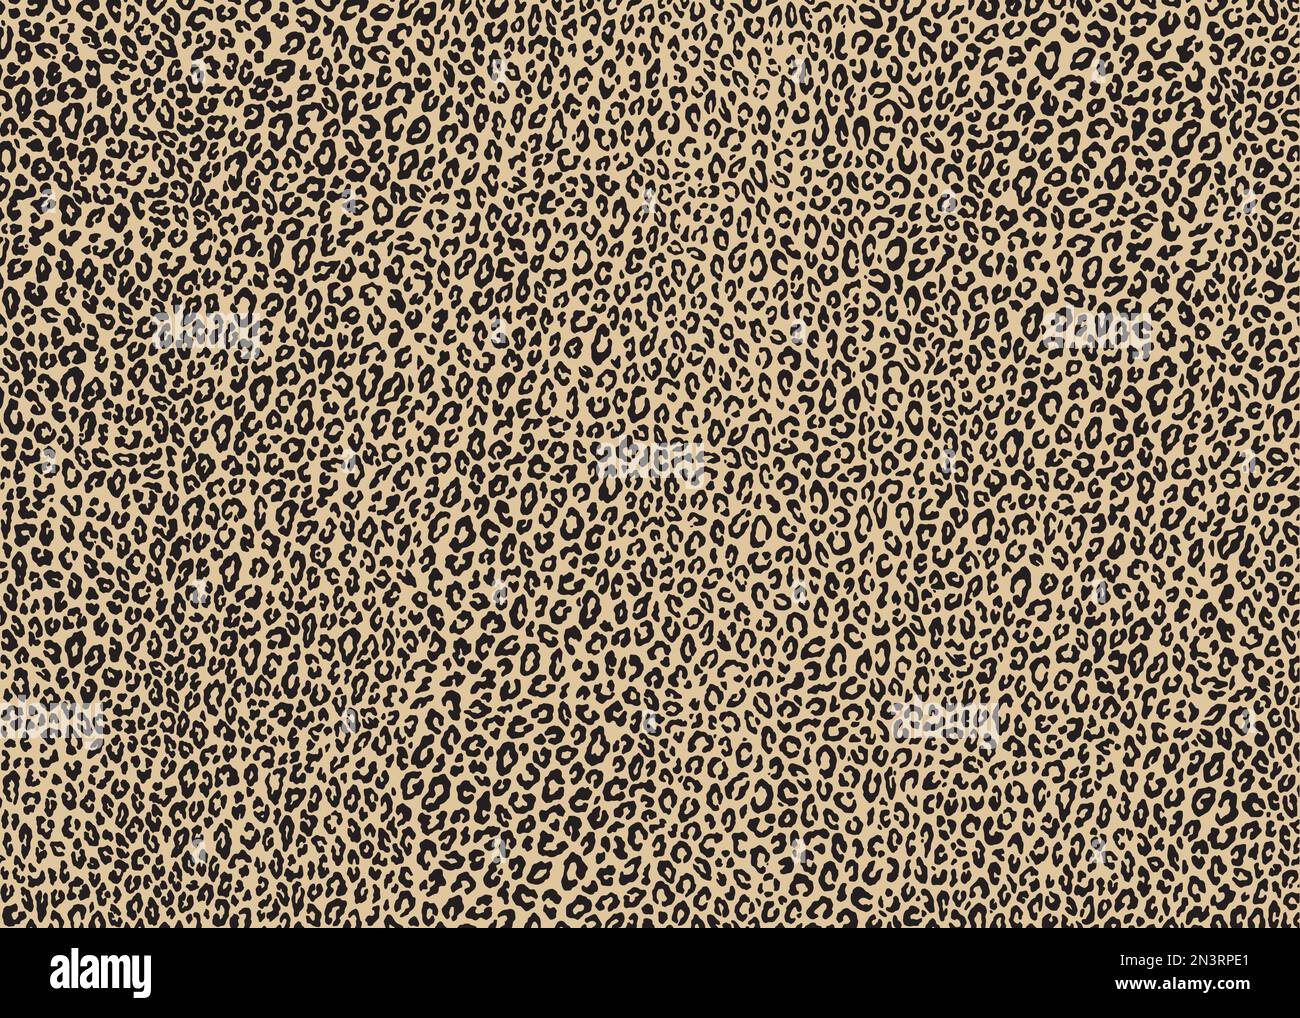 Leopard skin pattern design. Vector illustration background. For print, textile, web, home decor, fashion, surface, graphic design Stock Vector